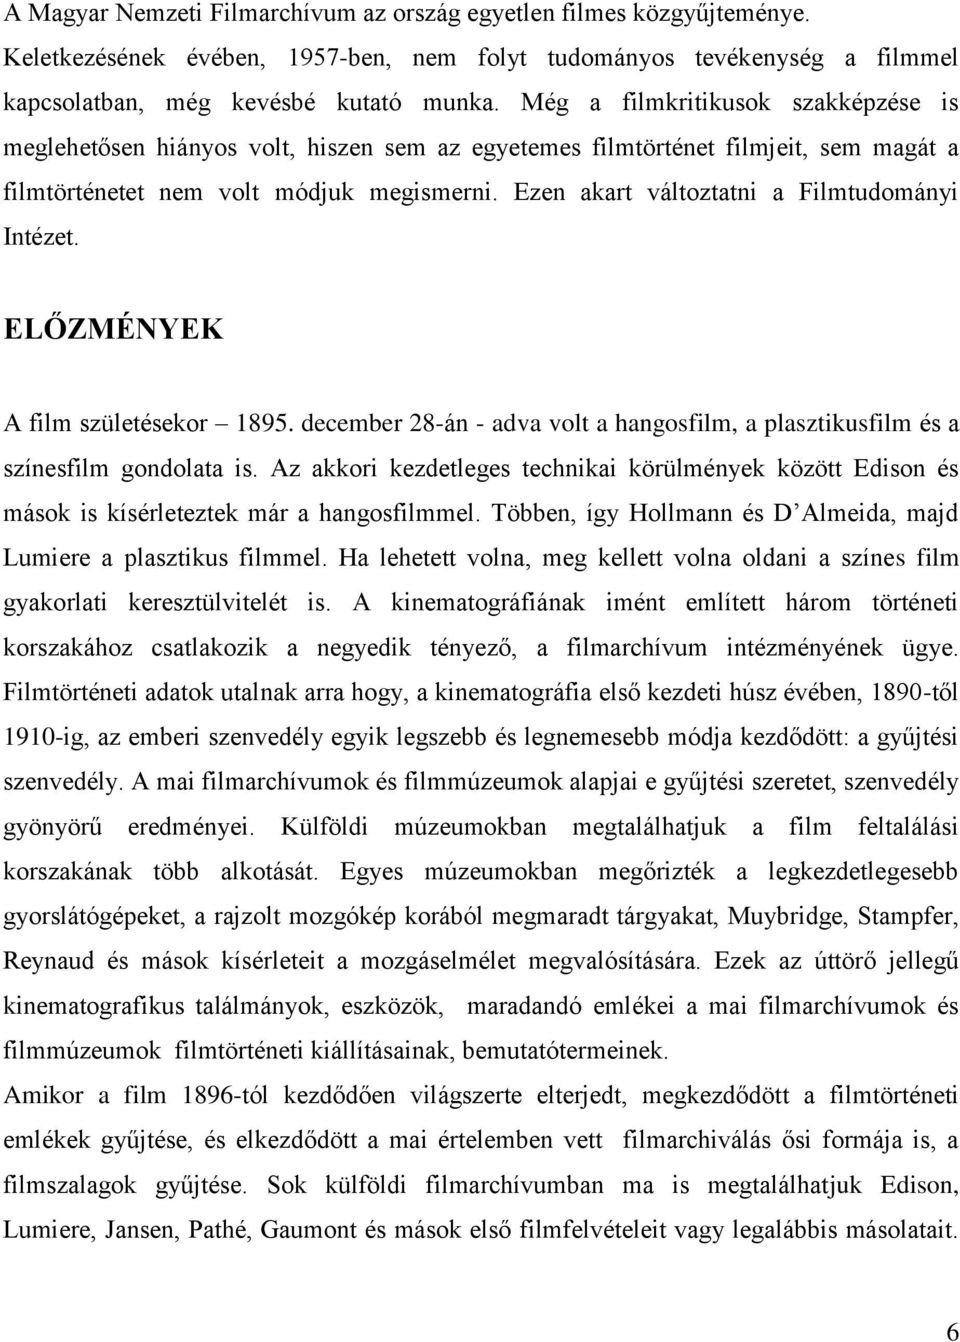 Magyar Nemzeti Filmarchívum - PDF Free Download